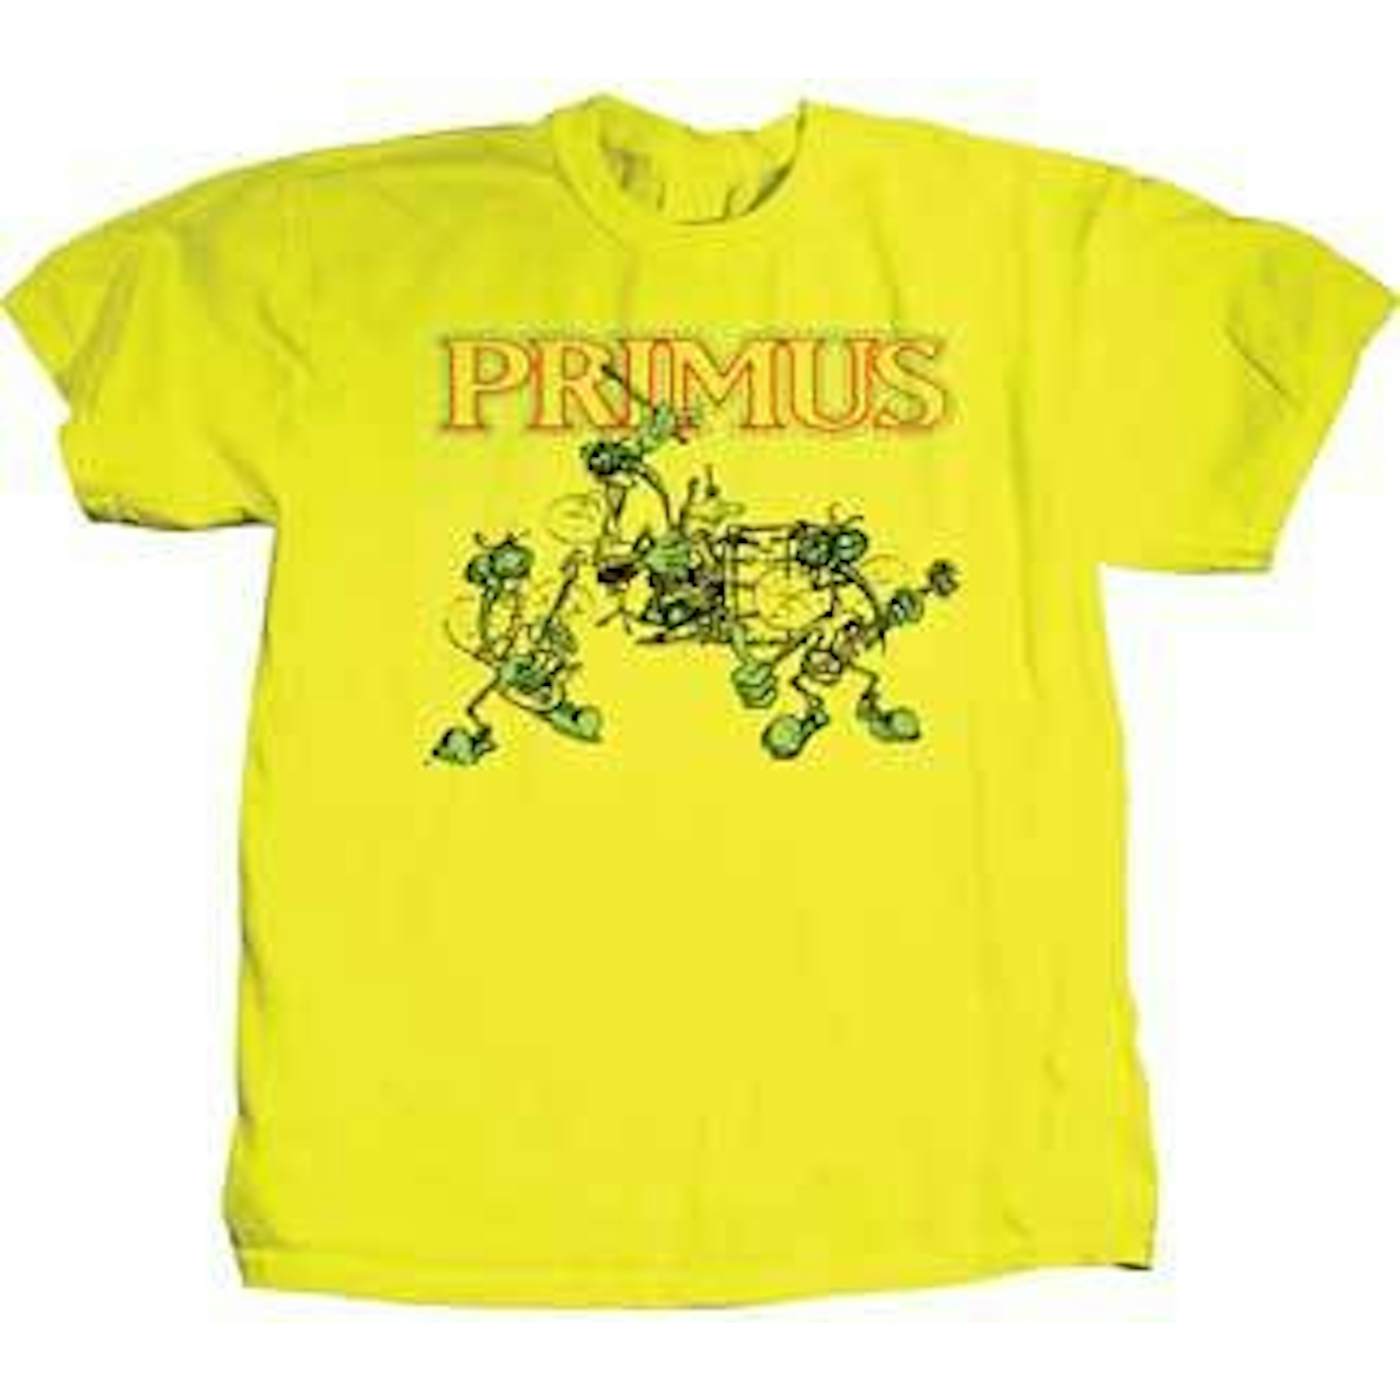 Primus T-Shirt | Skeeter Band Primus Shirt